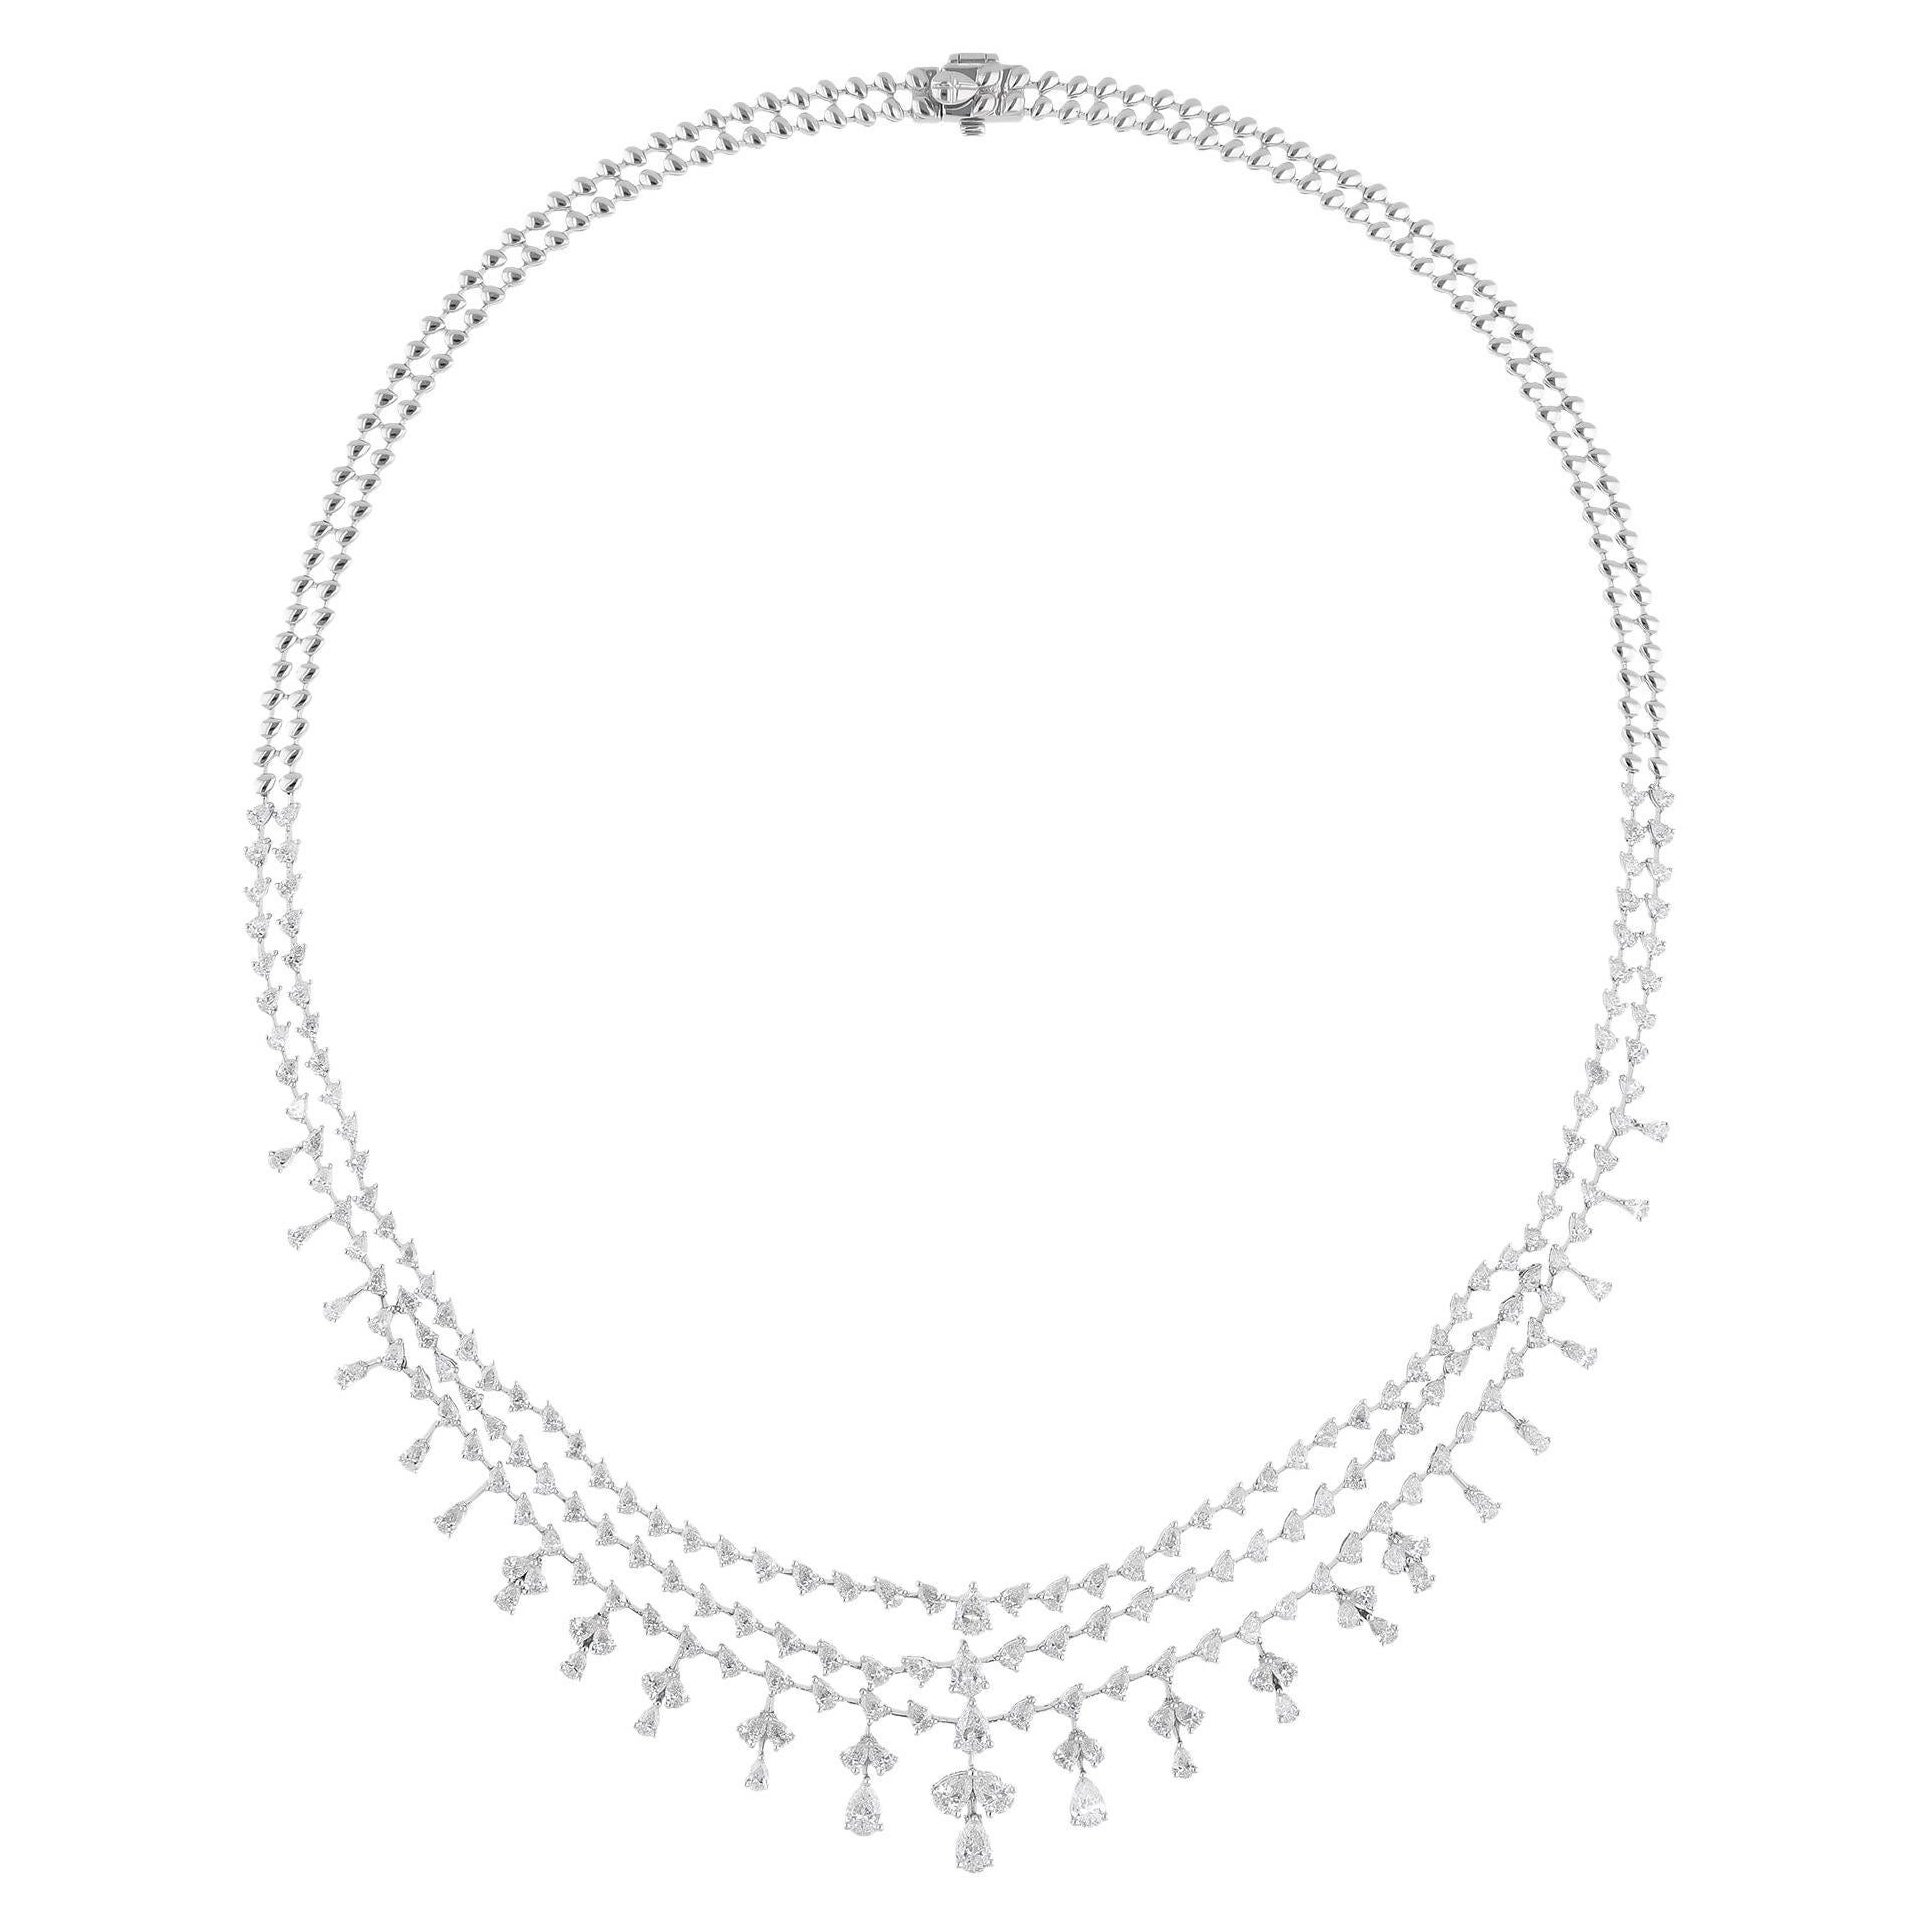 SI Clarity HI Color Pear Diamond Necklace 14 Karat White Gold Handmade Jewelry